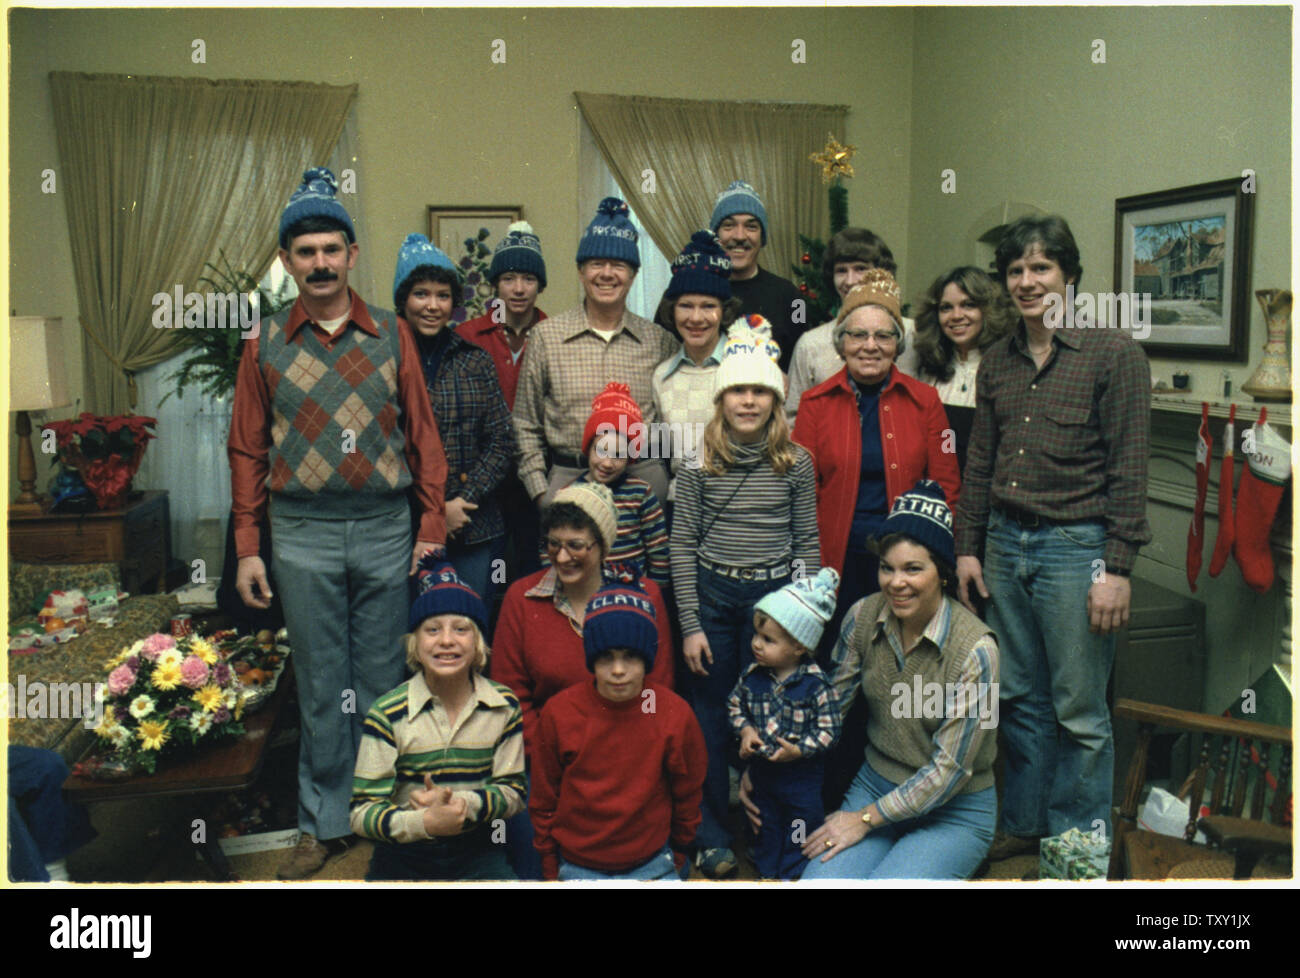 Carter family Christmas portrait Stock Photo